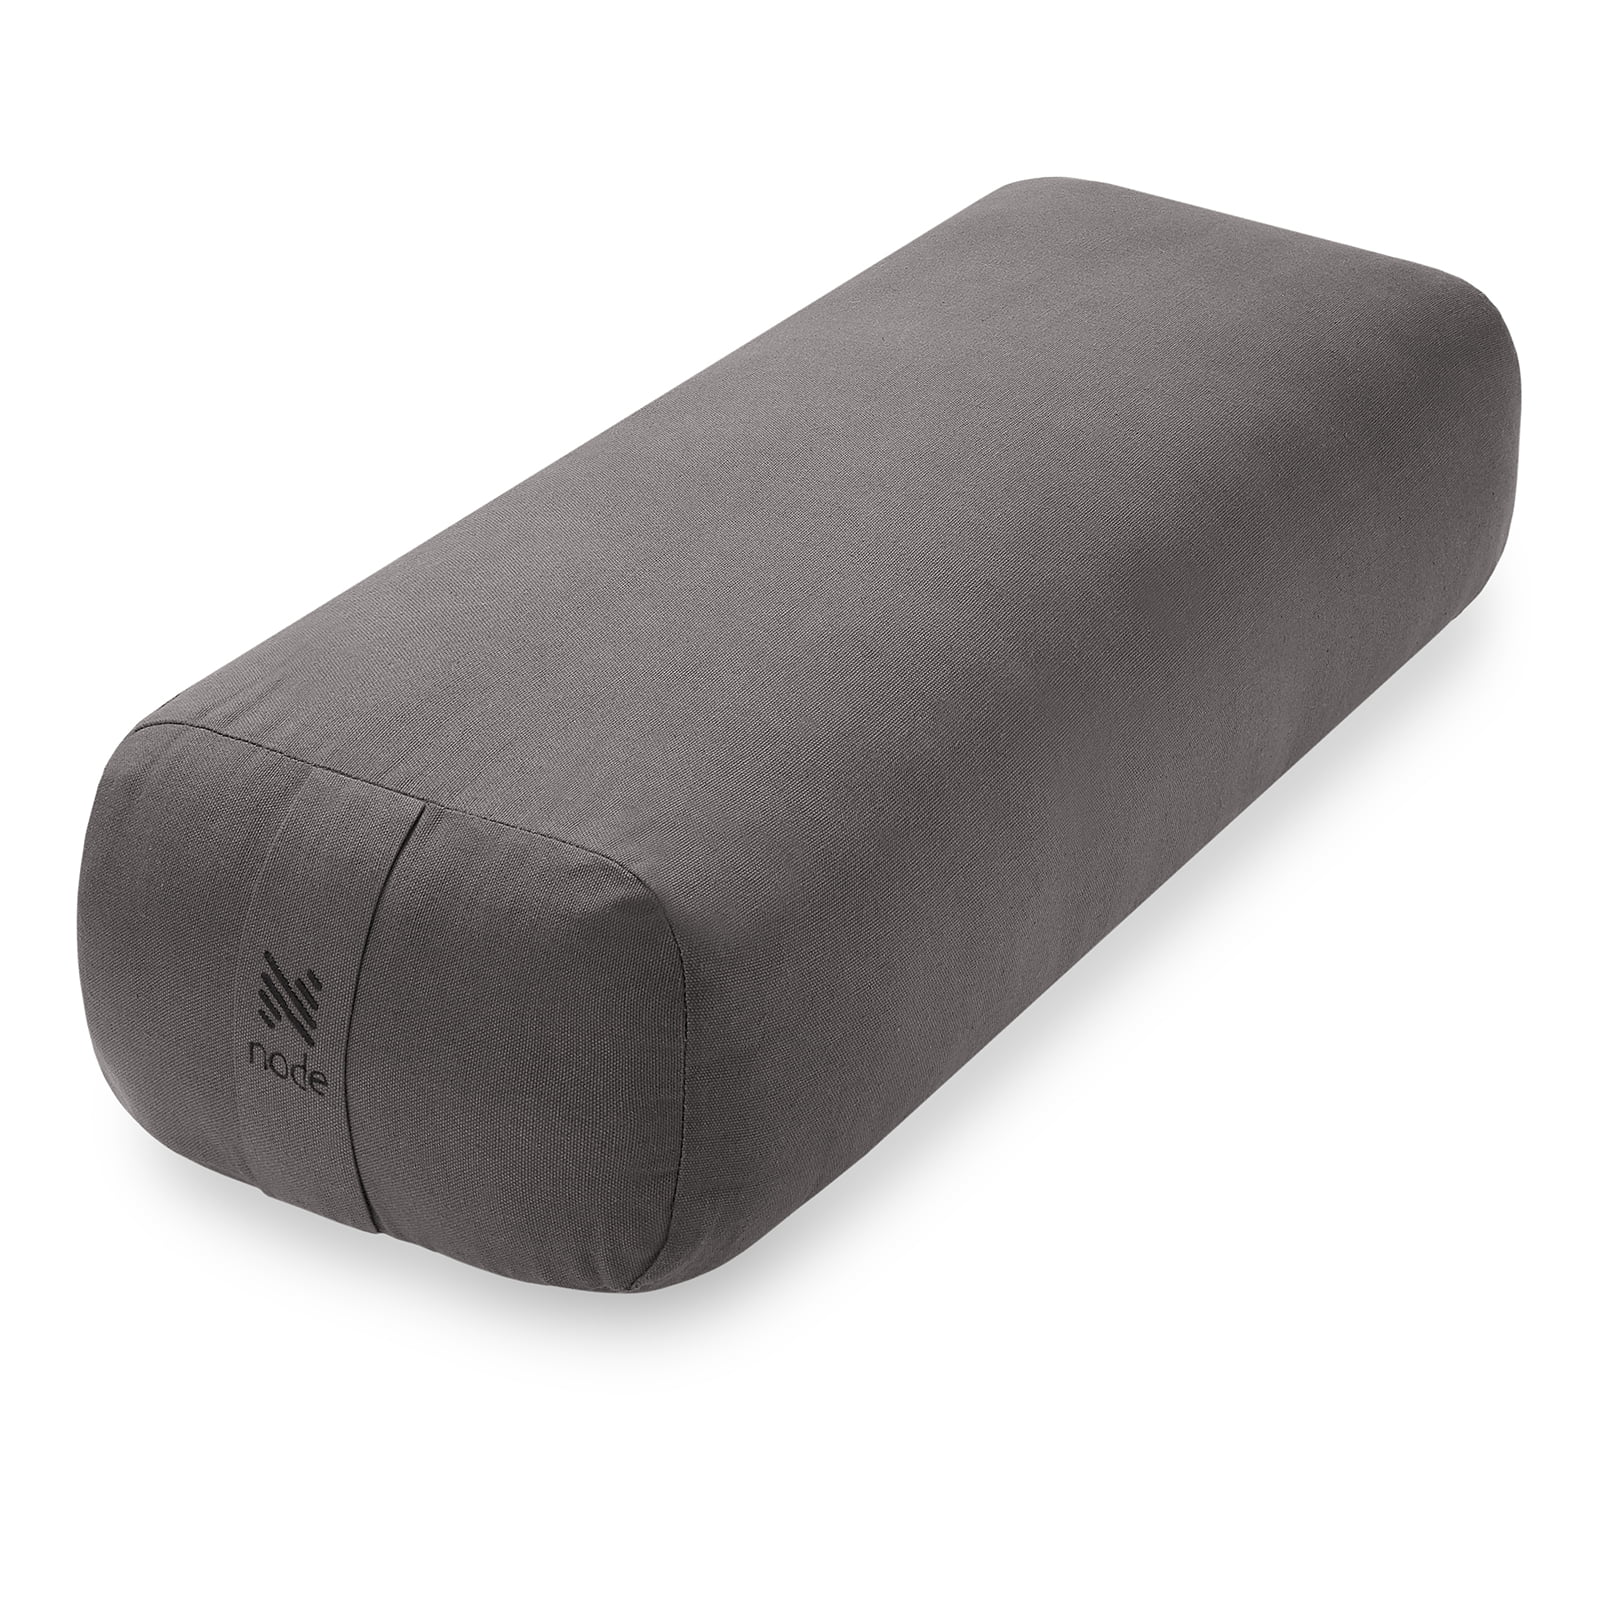 Cotton Meditation Cushion Yoga Rectangular Bolsters Removable Washable Cover 